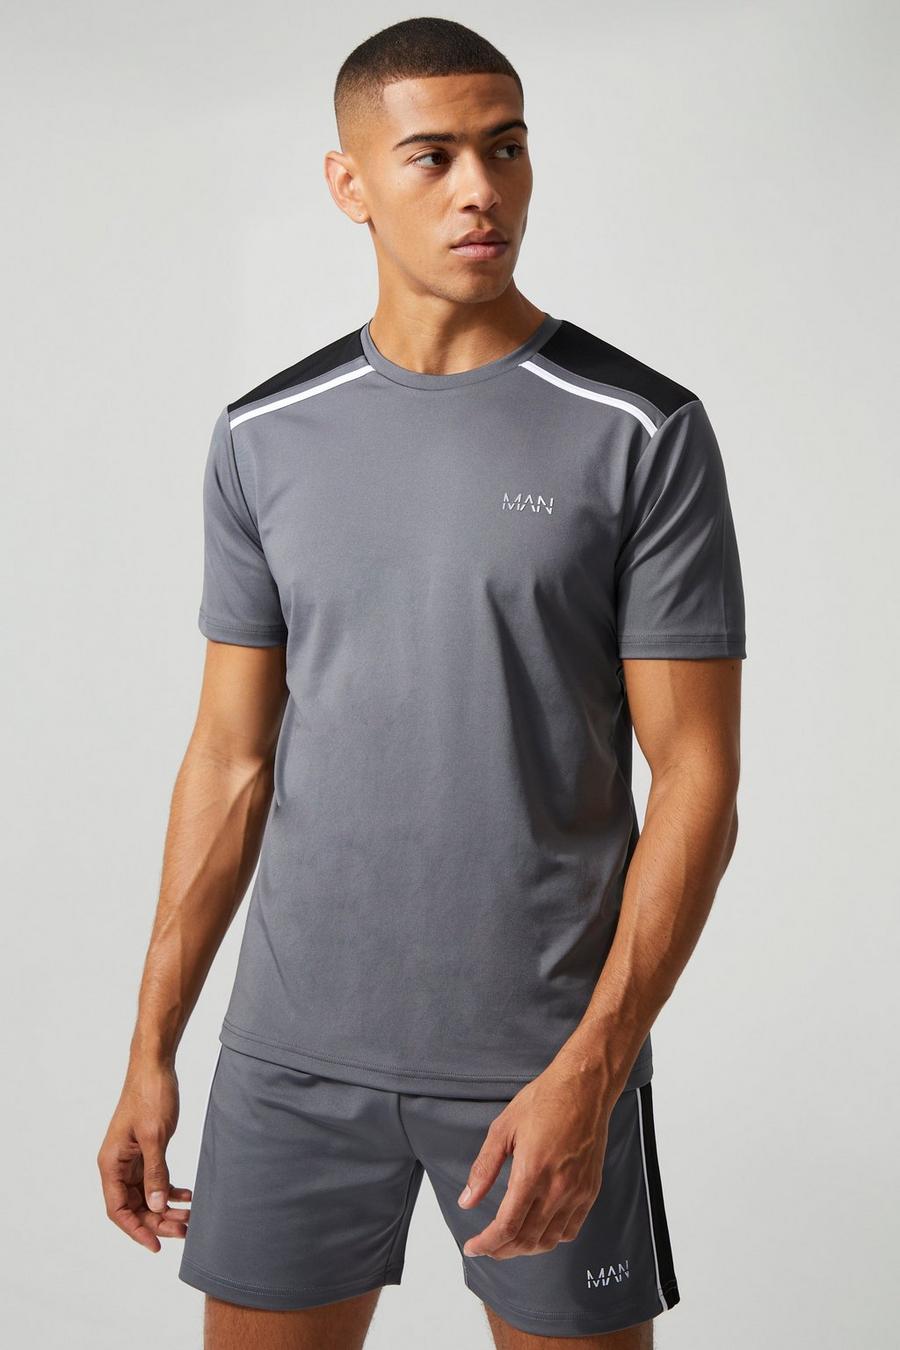 Charcoal grey Man Active Performance Training T-shirt